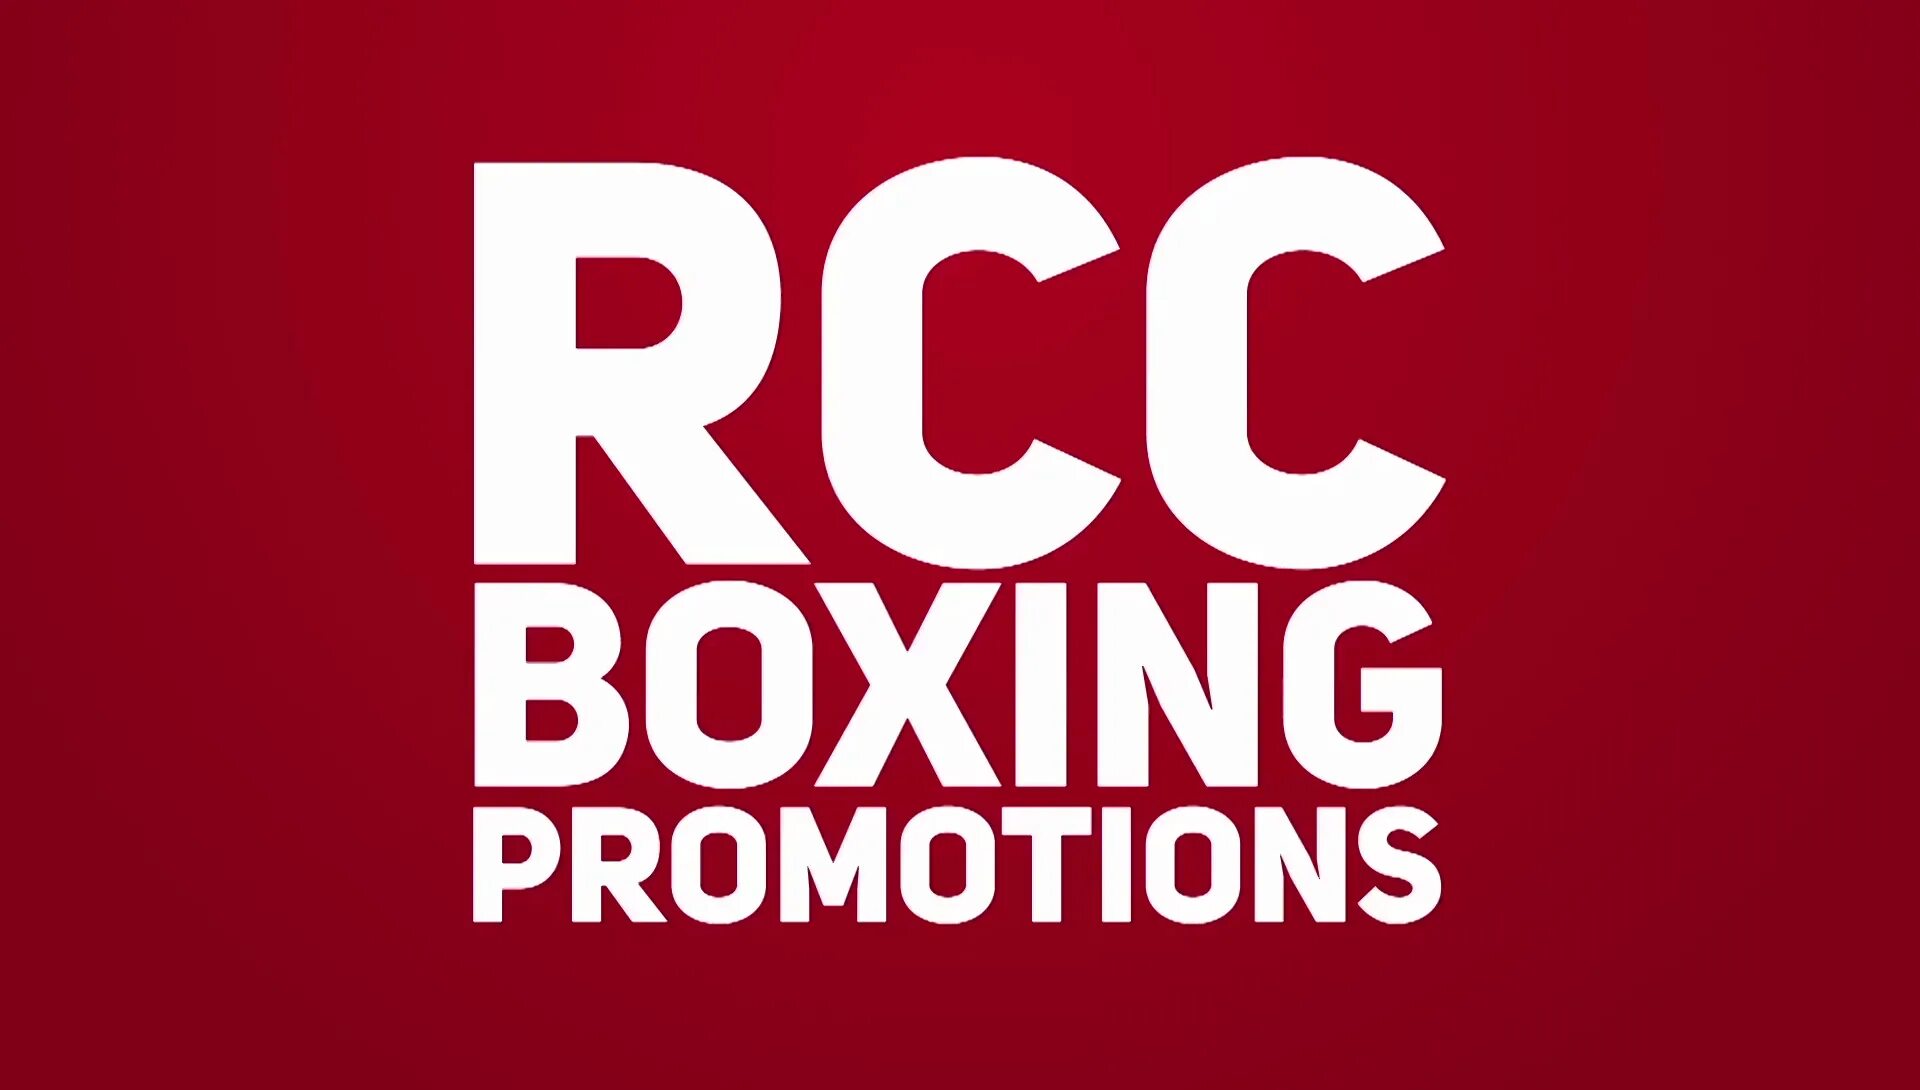 RCC Boxing. RCC Boxing promotions. RCC логотип. RCC Boxing promotions логотип. Boxing promotions